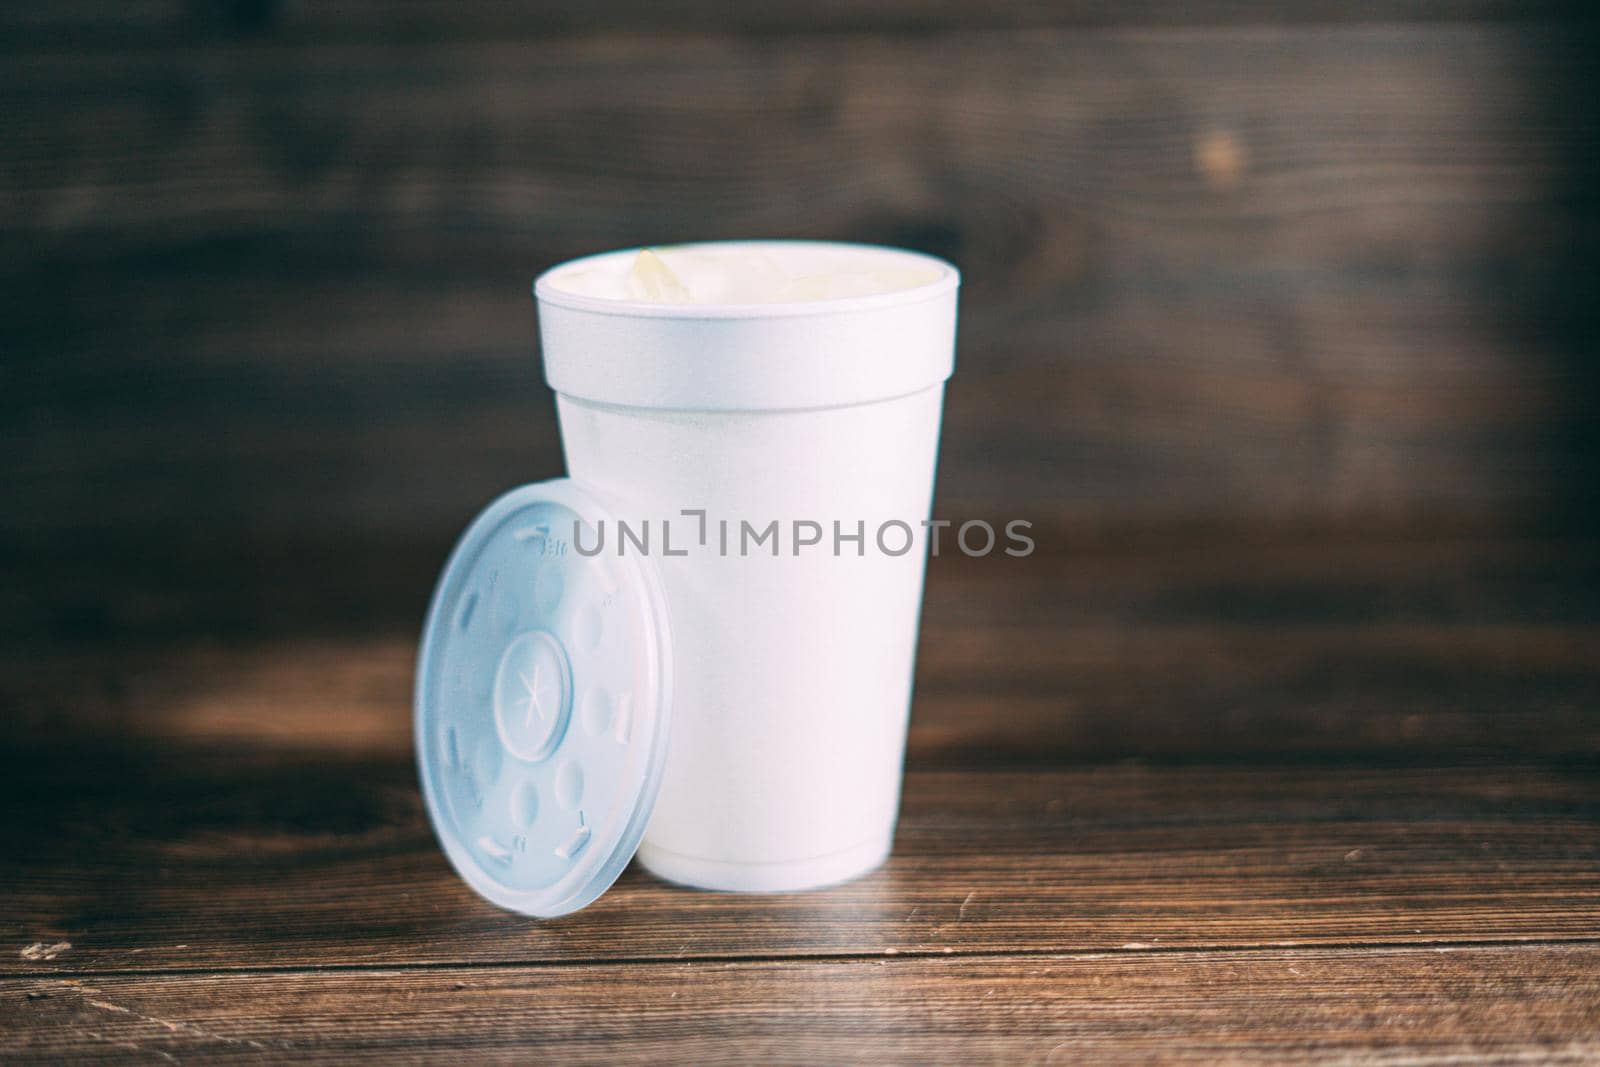 A white disposable styrofoam cup